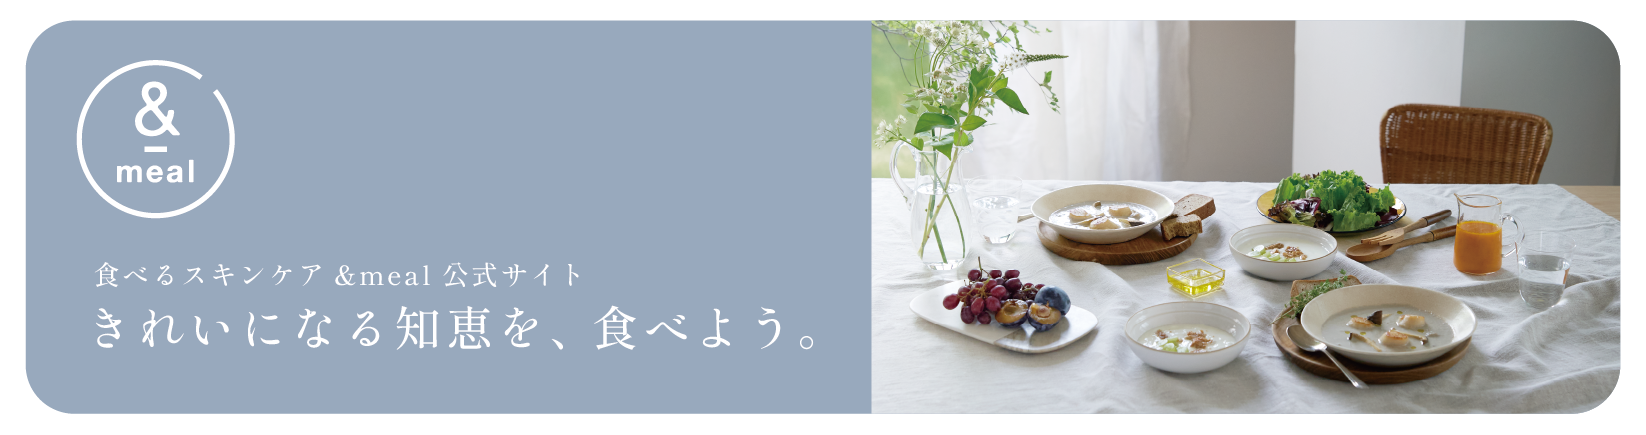 &meal banner_meeth.jp@2x.png